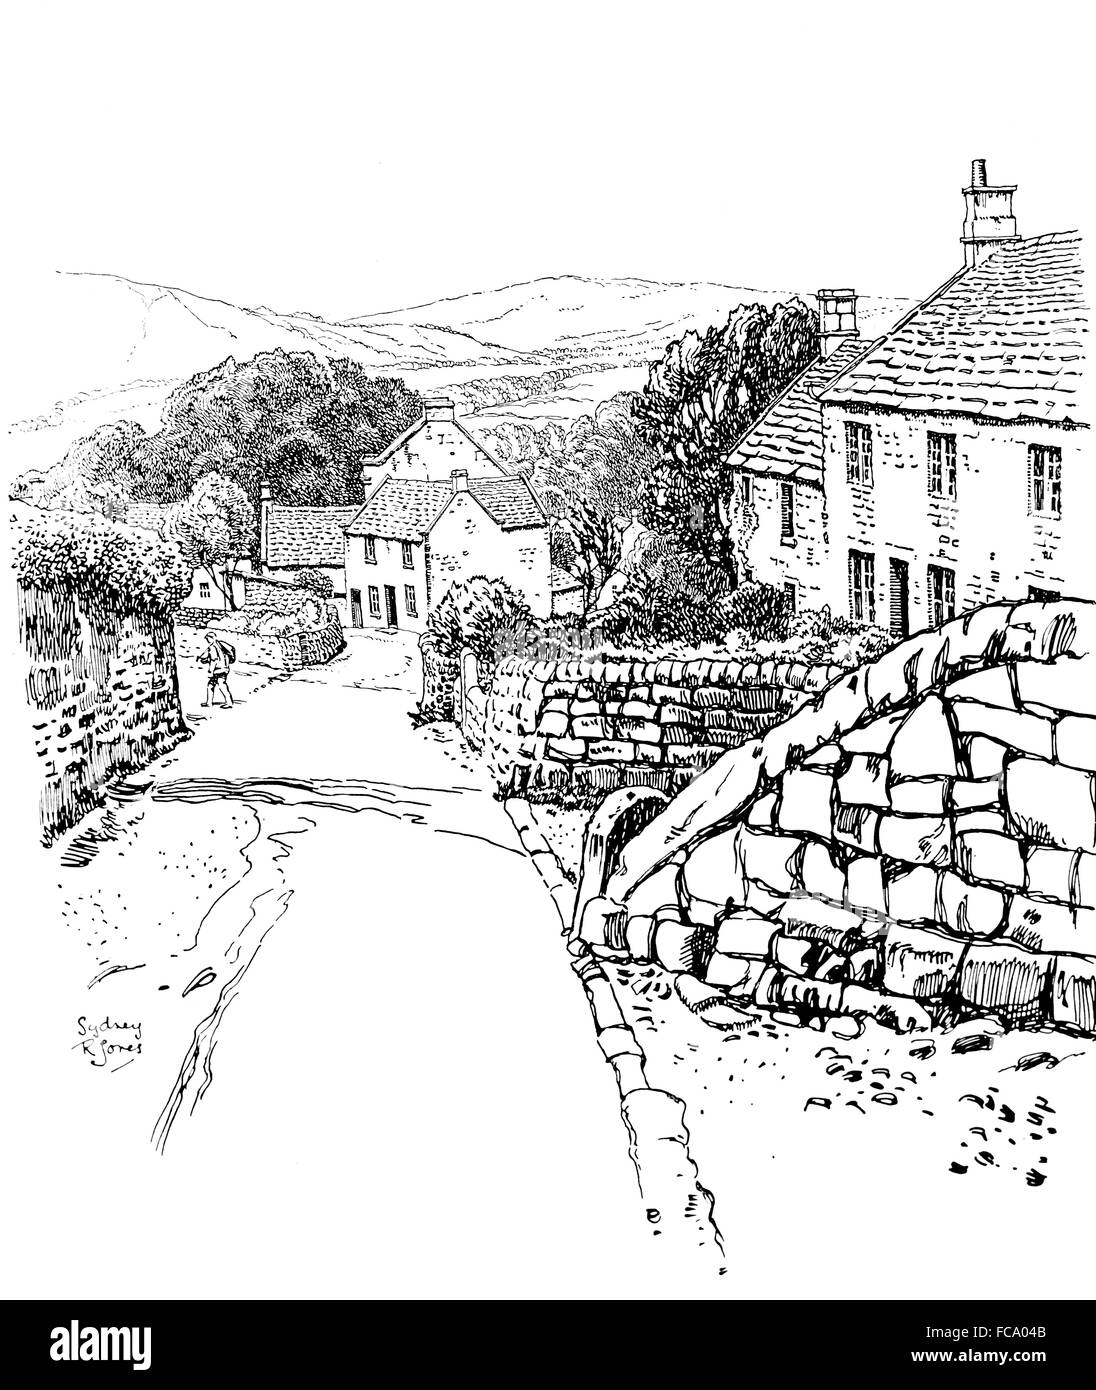 UK, England, Derbyshire, Stanton in Peak stone built houses, Main Road in1911, line illustration by, Sydney R Jones Stock Photo